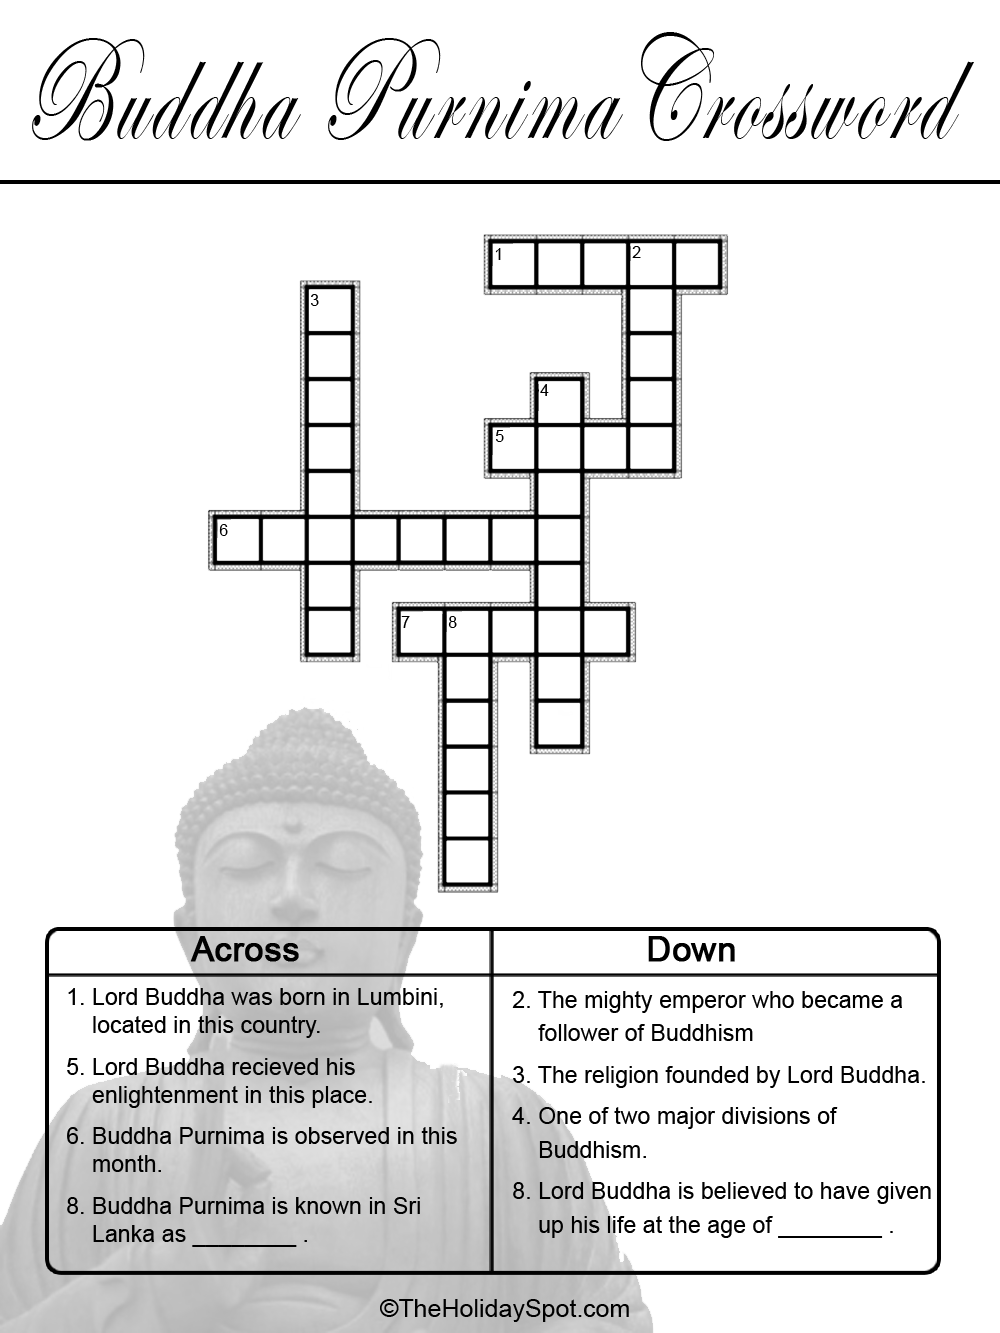 Black and White Crossword Puzzle for Buddha Purnima